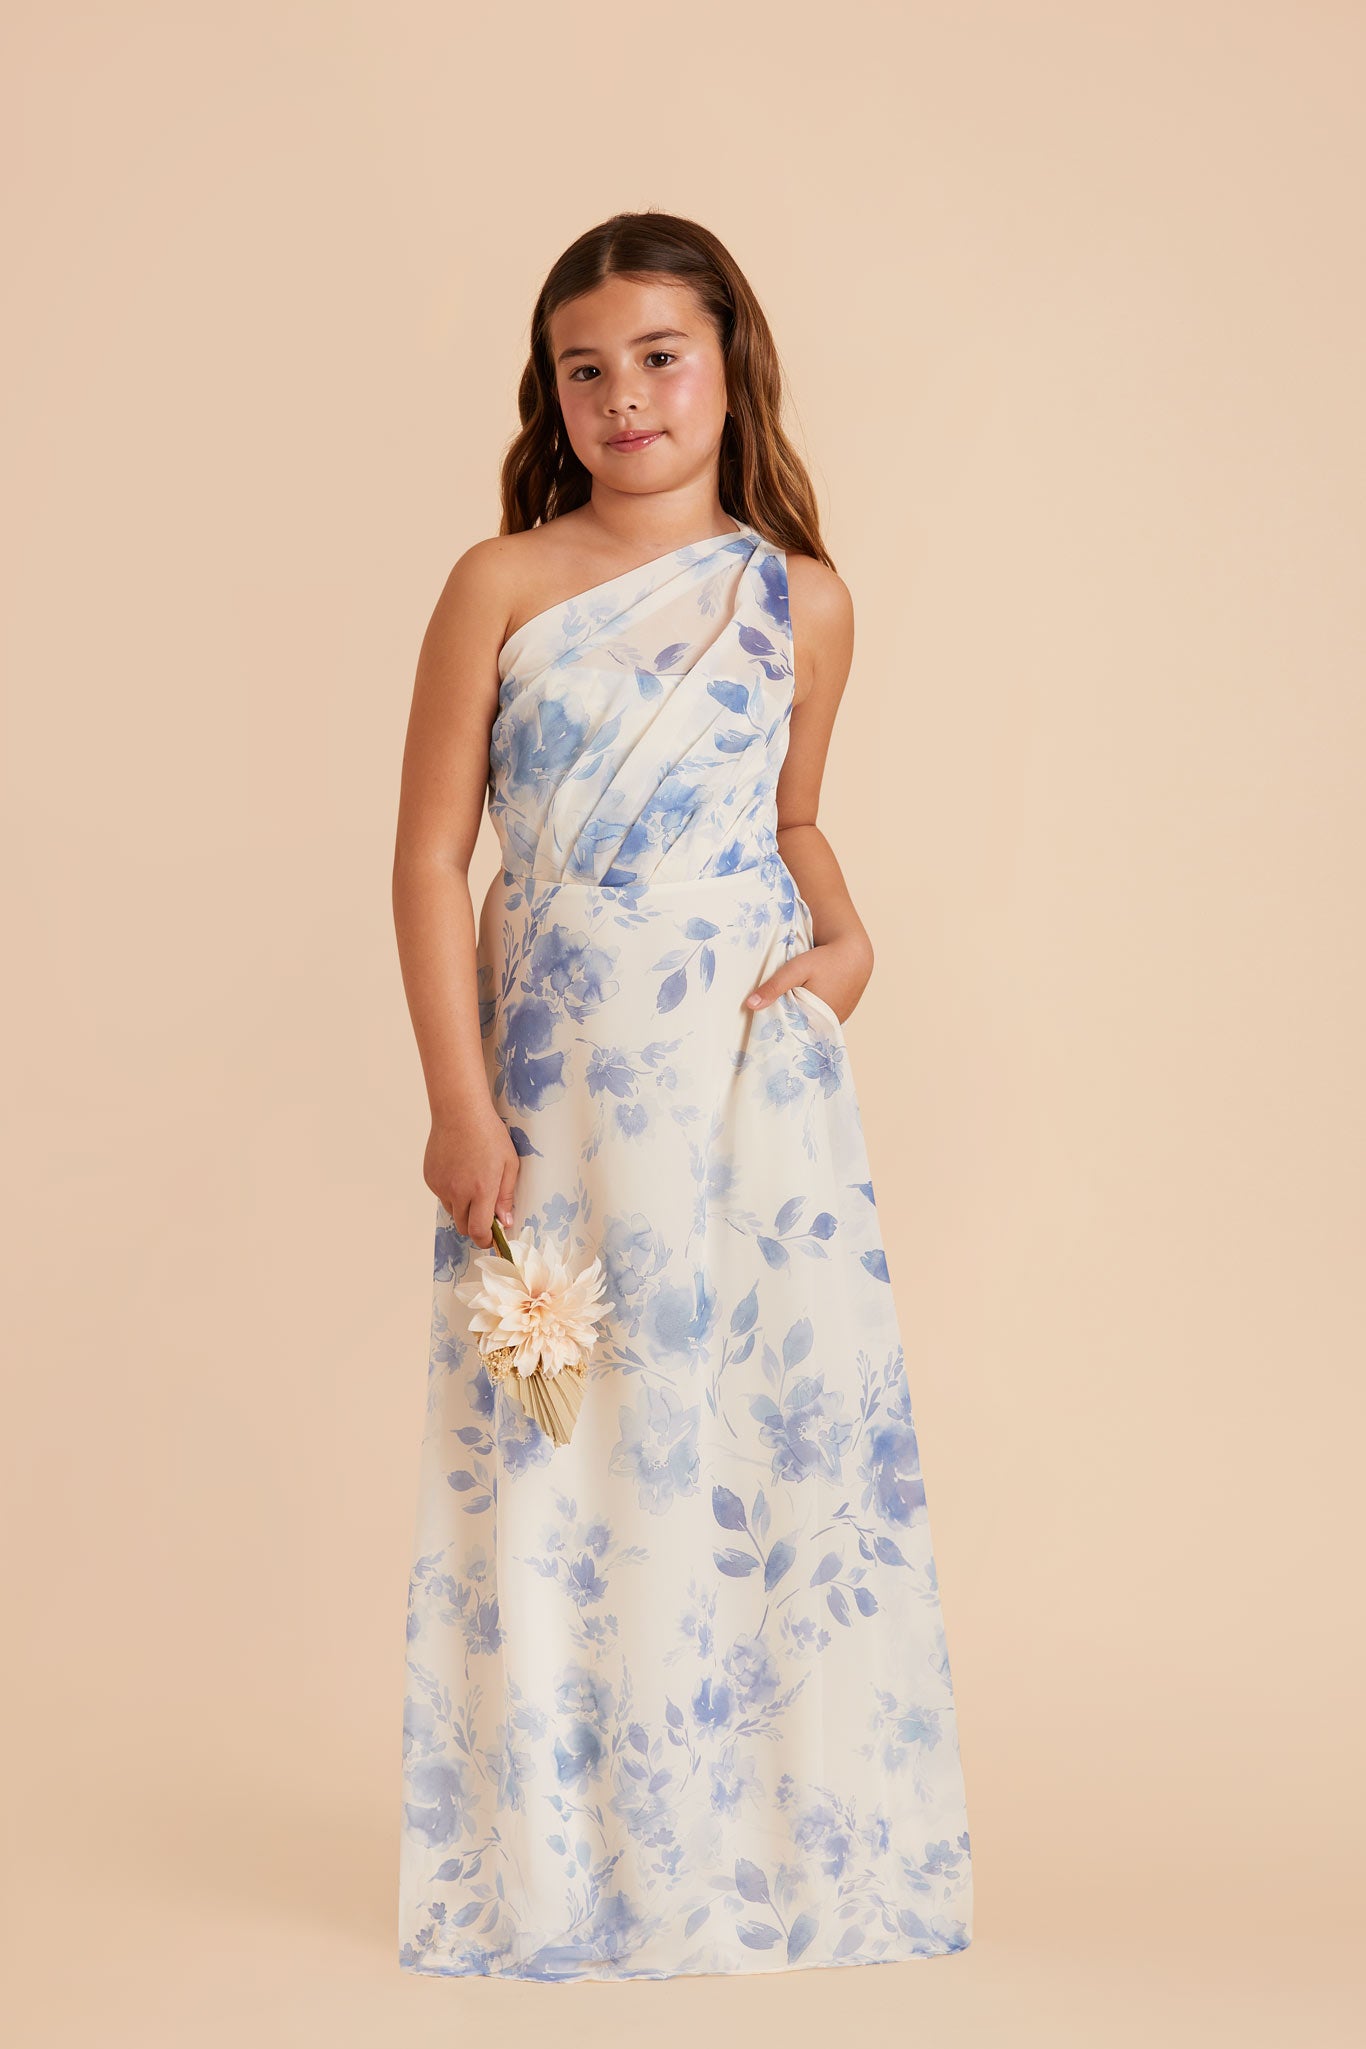 Blue Rococo Flora Kiara Junior Chiffon Dress by Birdy Grey